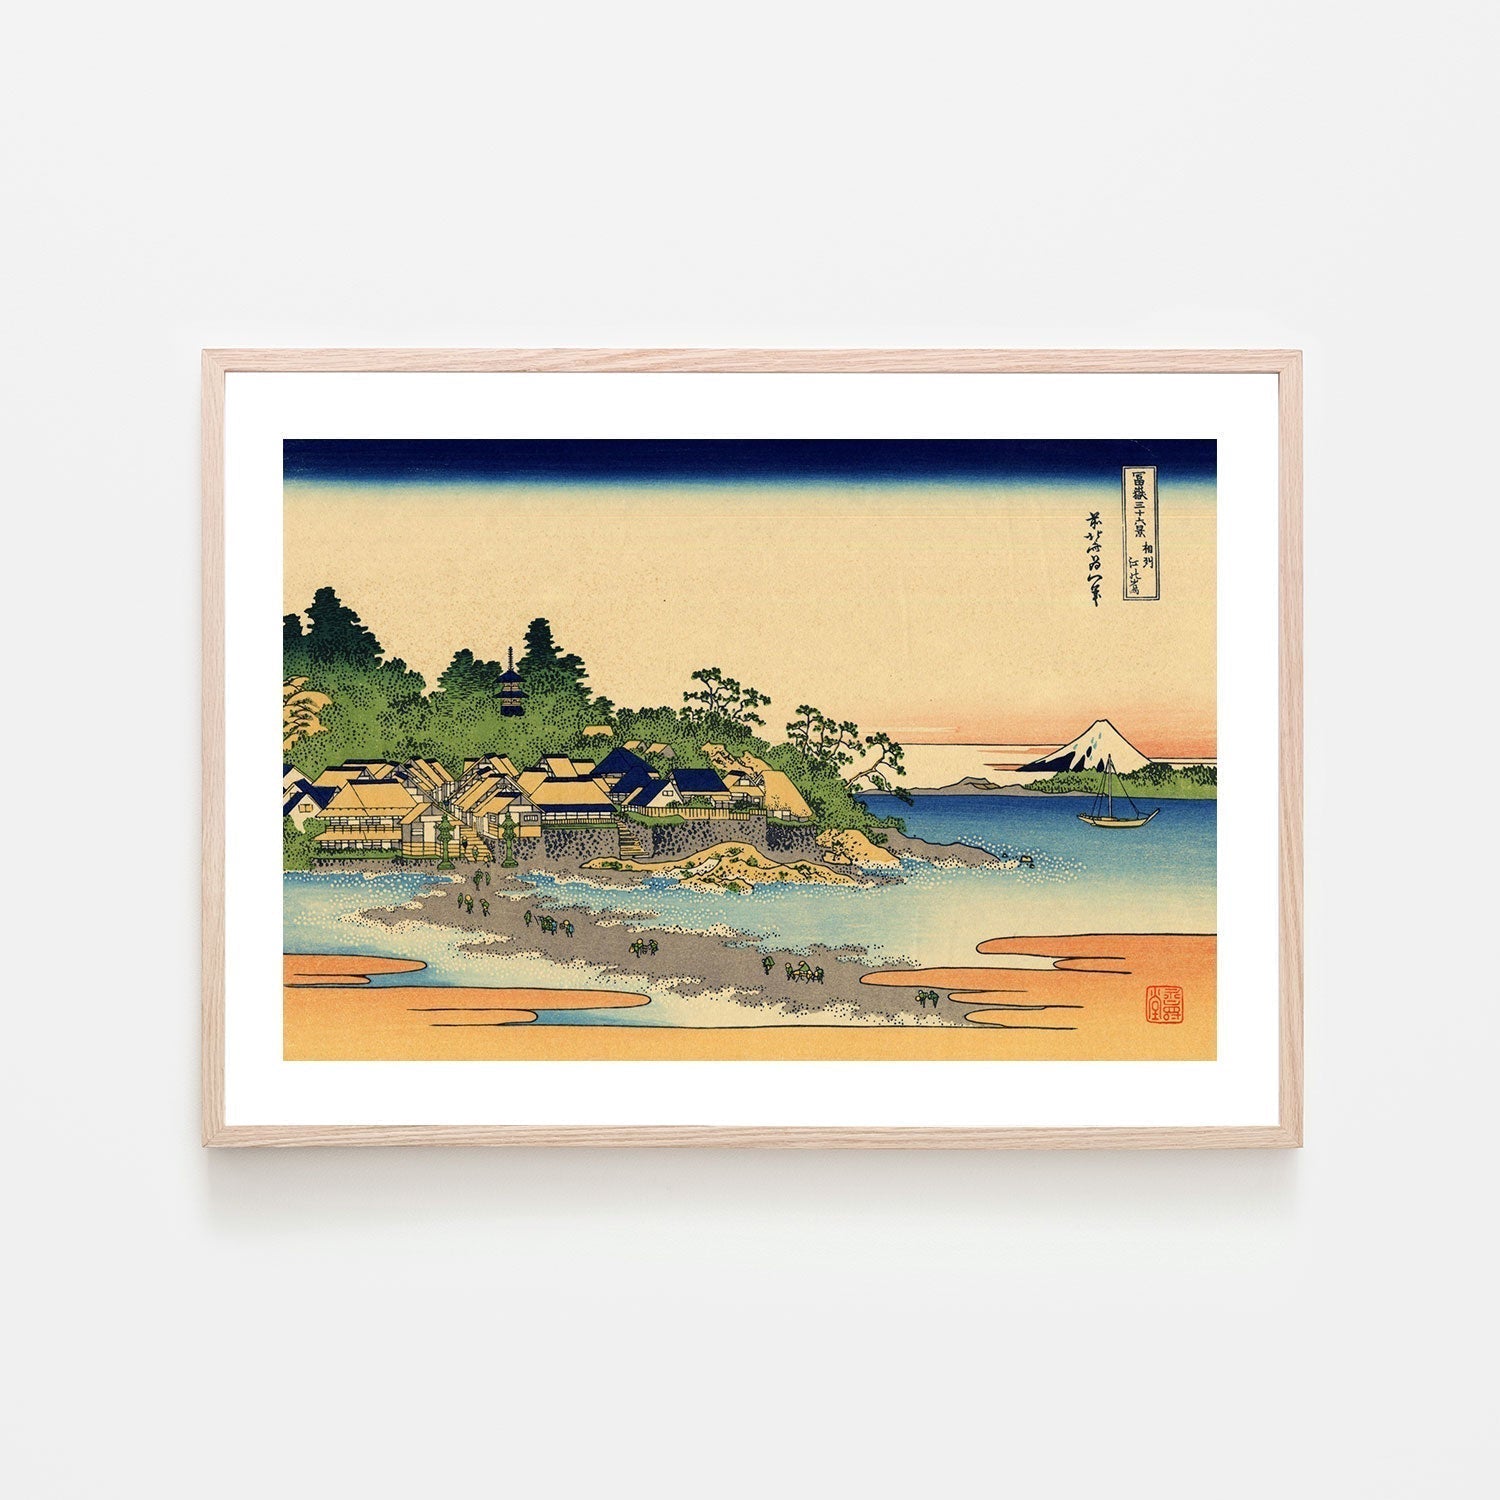 wall-art-print-canvas-poster-framed-Enoshima in the Sagami province, Style A-by-Katsushika Hokusai-Gioia Wall Art